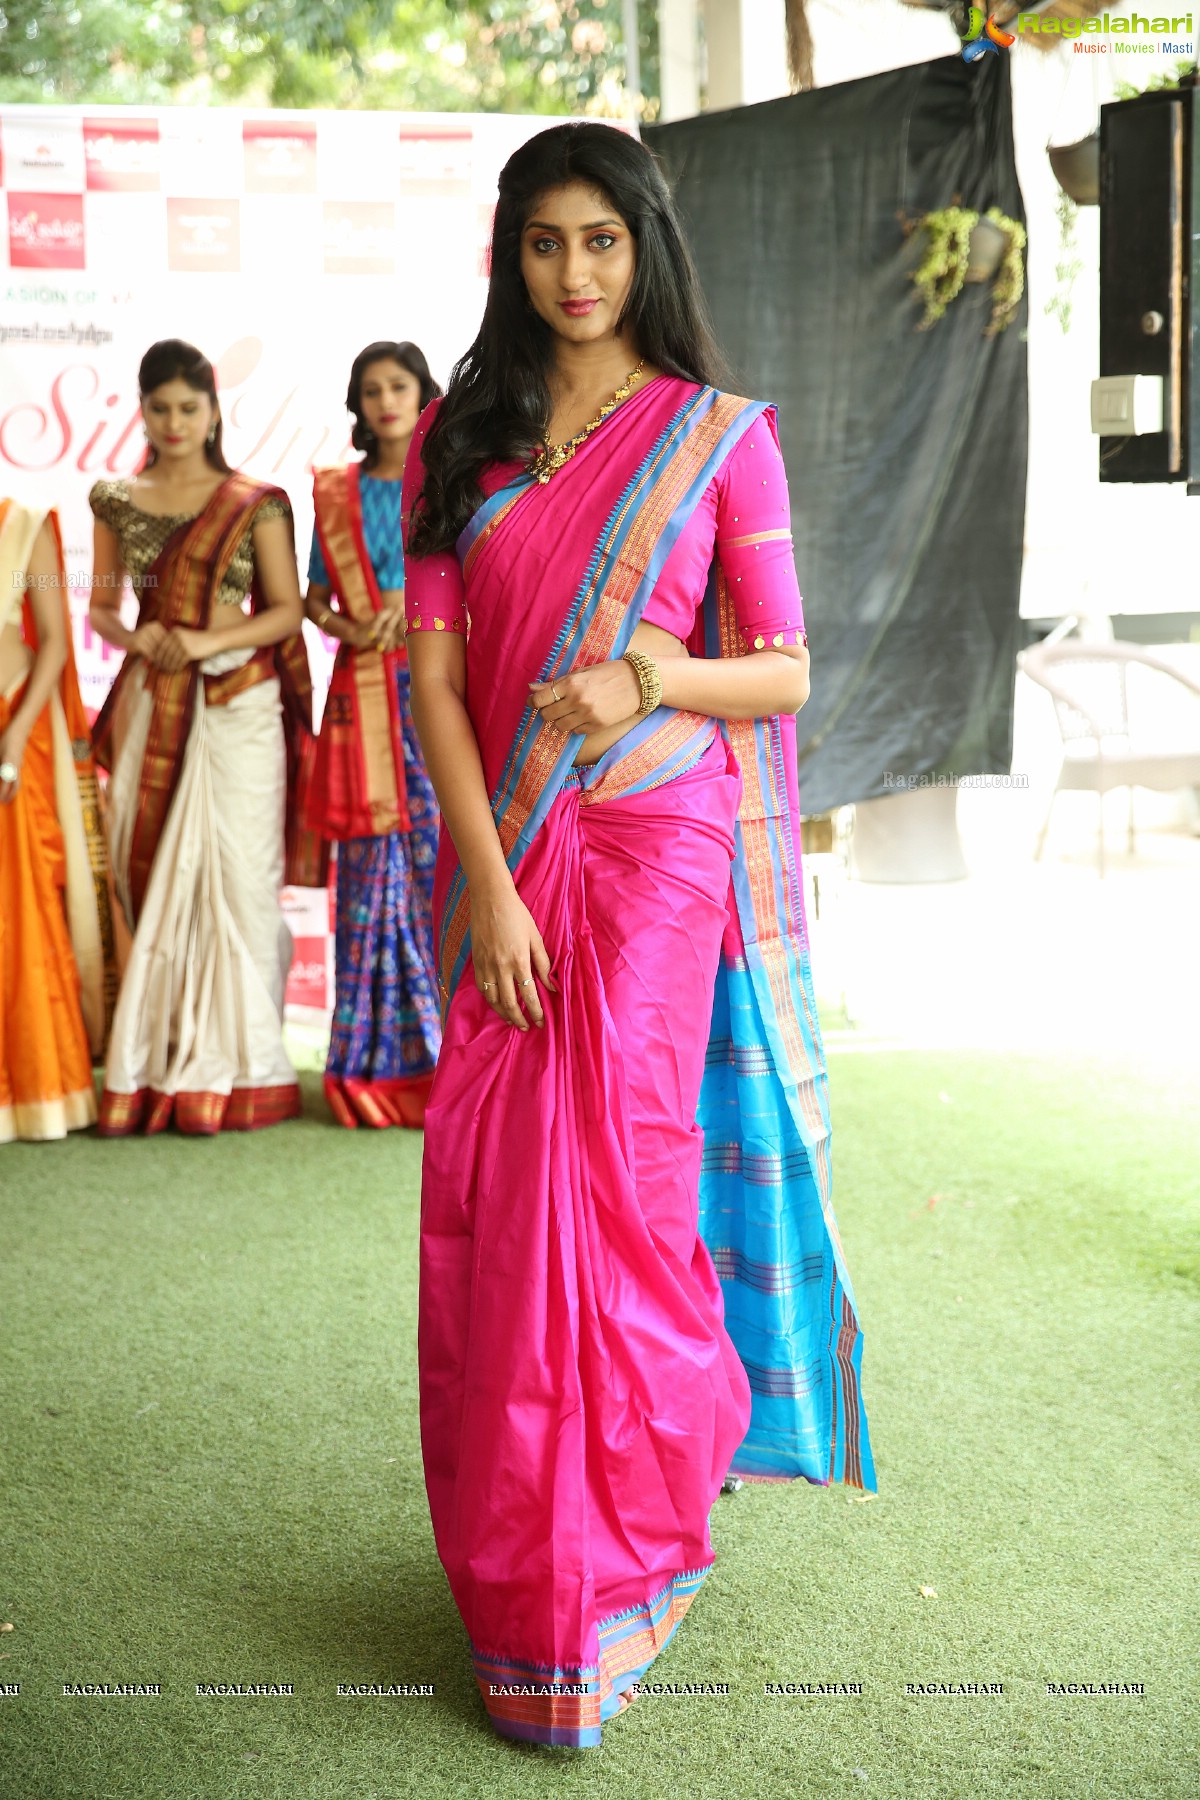 Silk India Expo Curtain Raiser at Cafe Hut-k, Jubilee Hills, Hyderabad